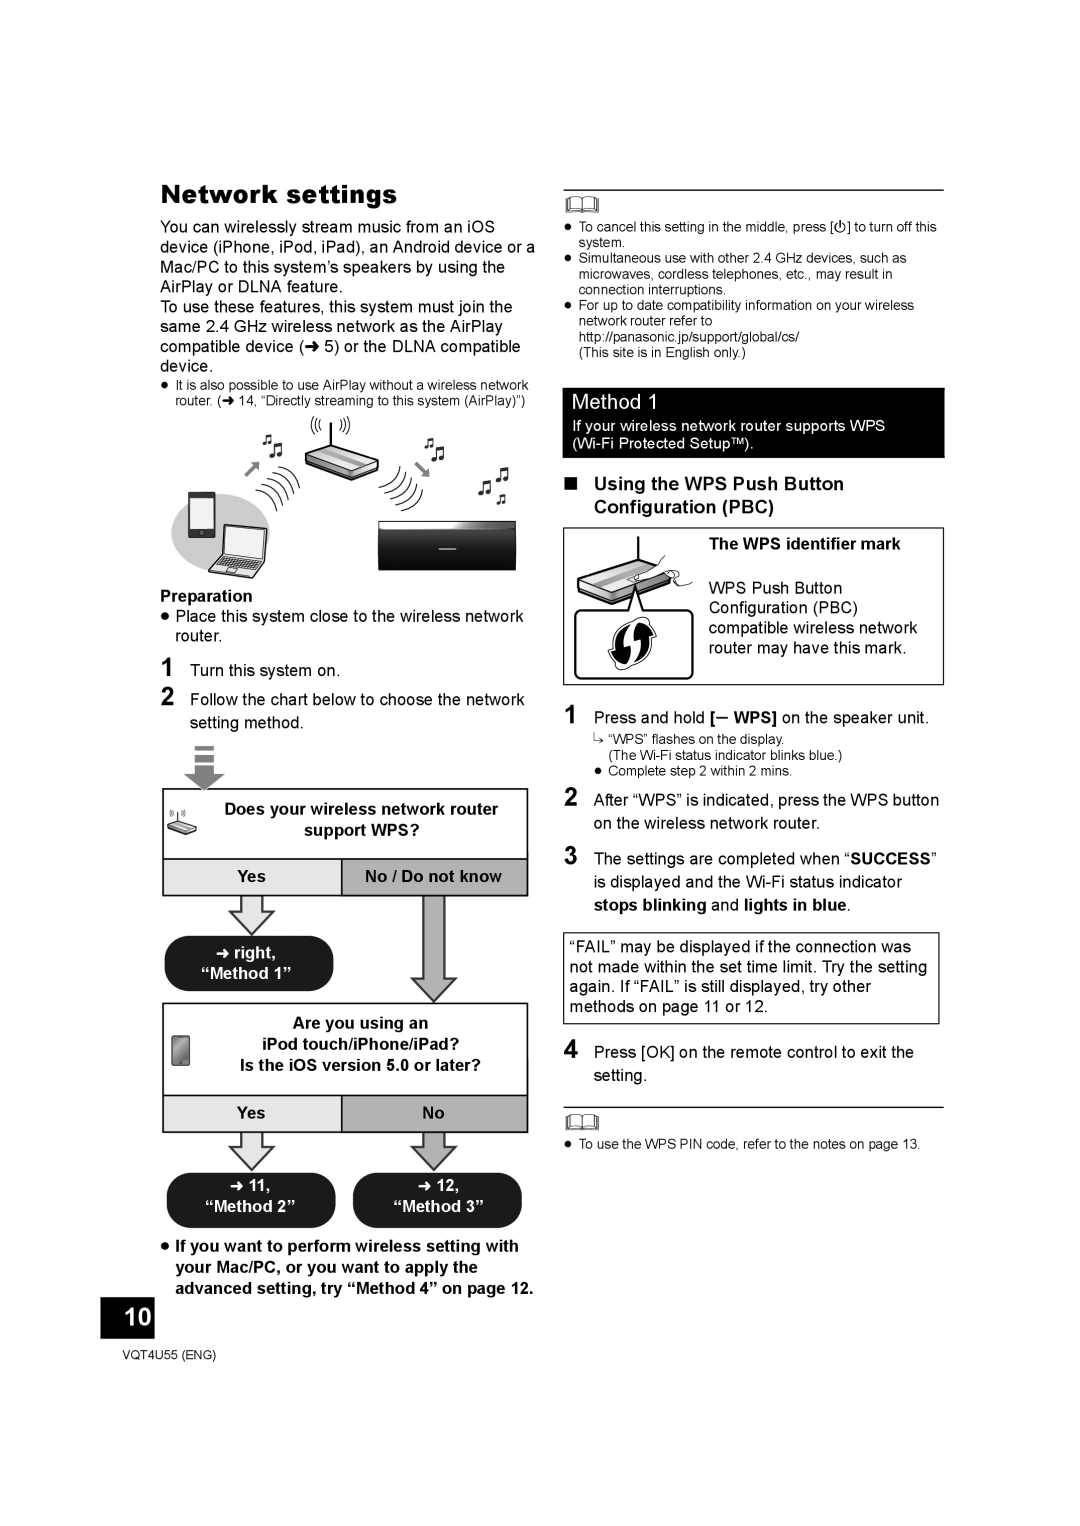 Panasonic SC-NE5 owner manual Network settings, Using the WPS Push Button Configuration PBC, lright “Method 1” 